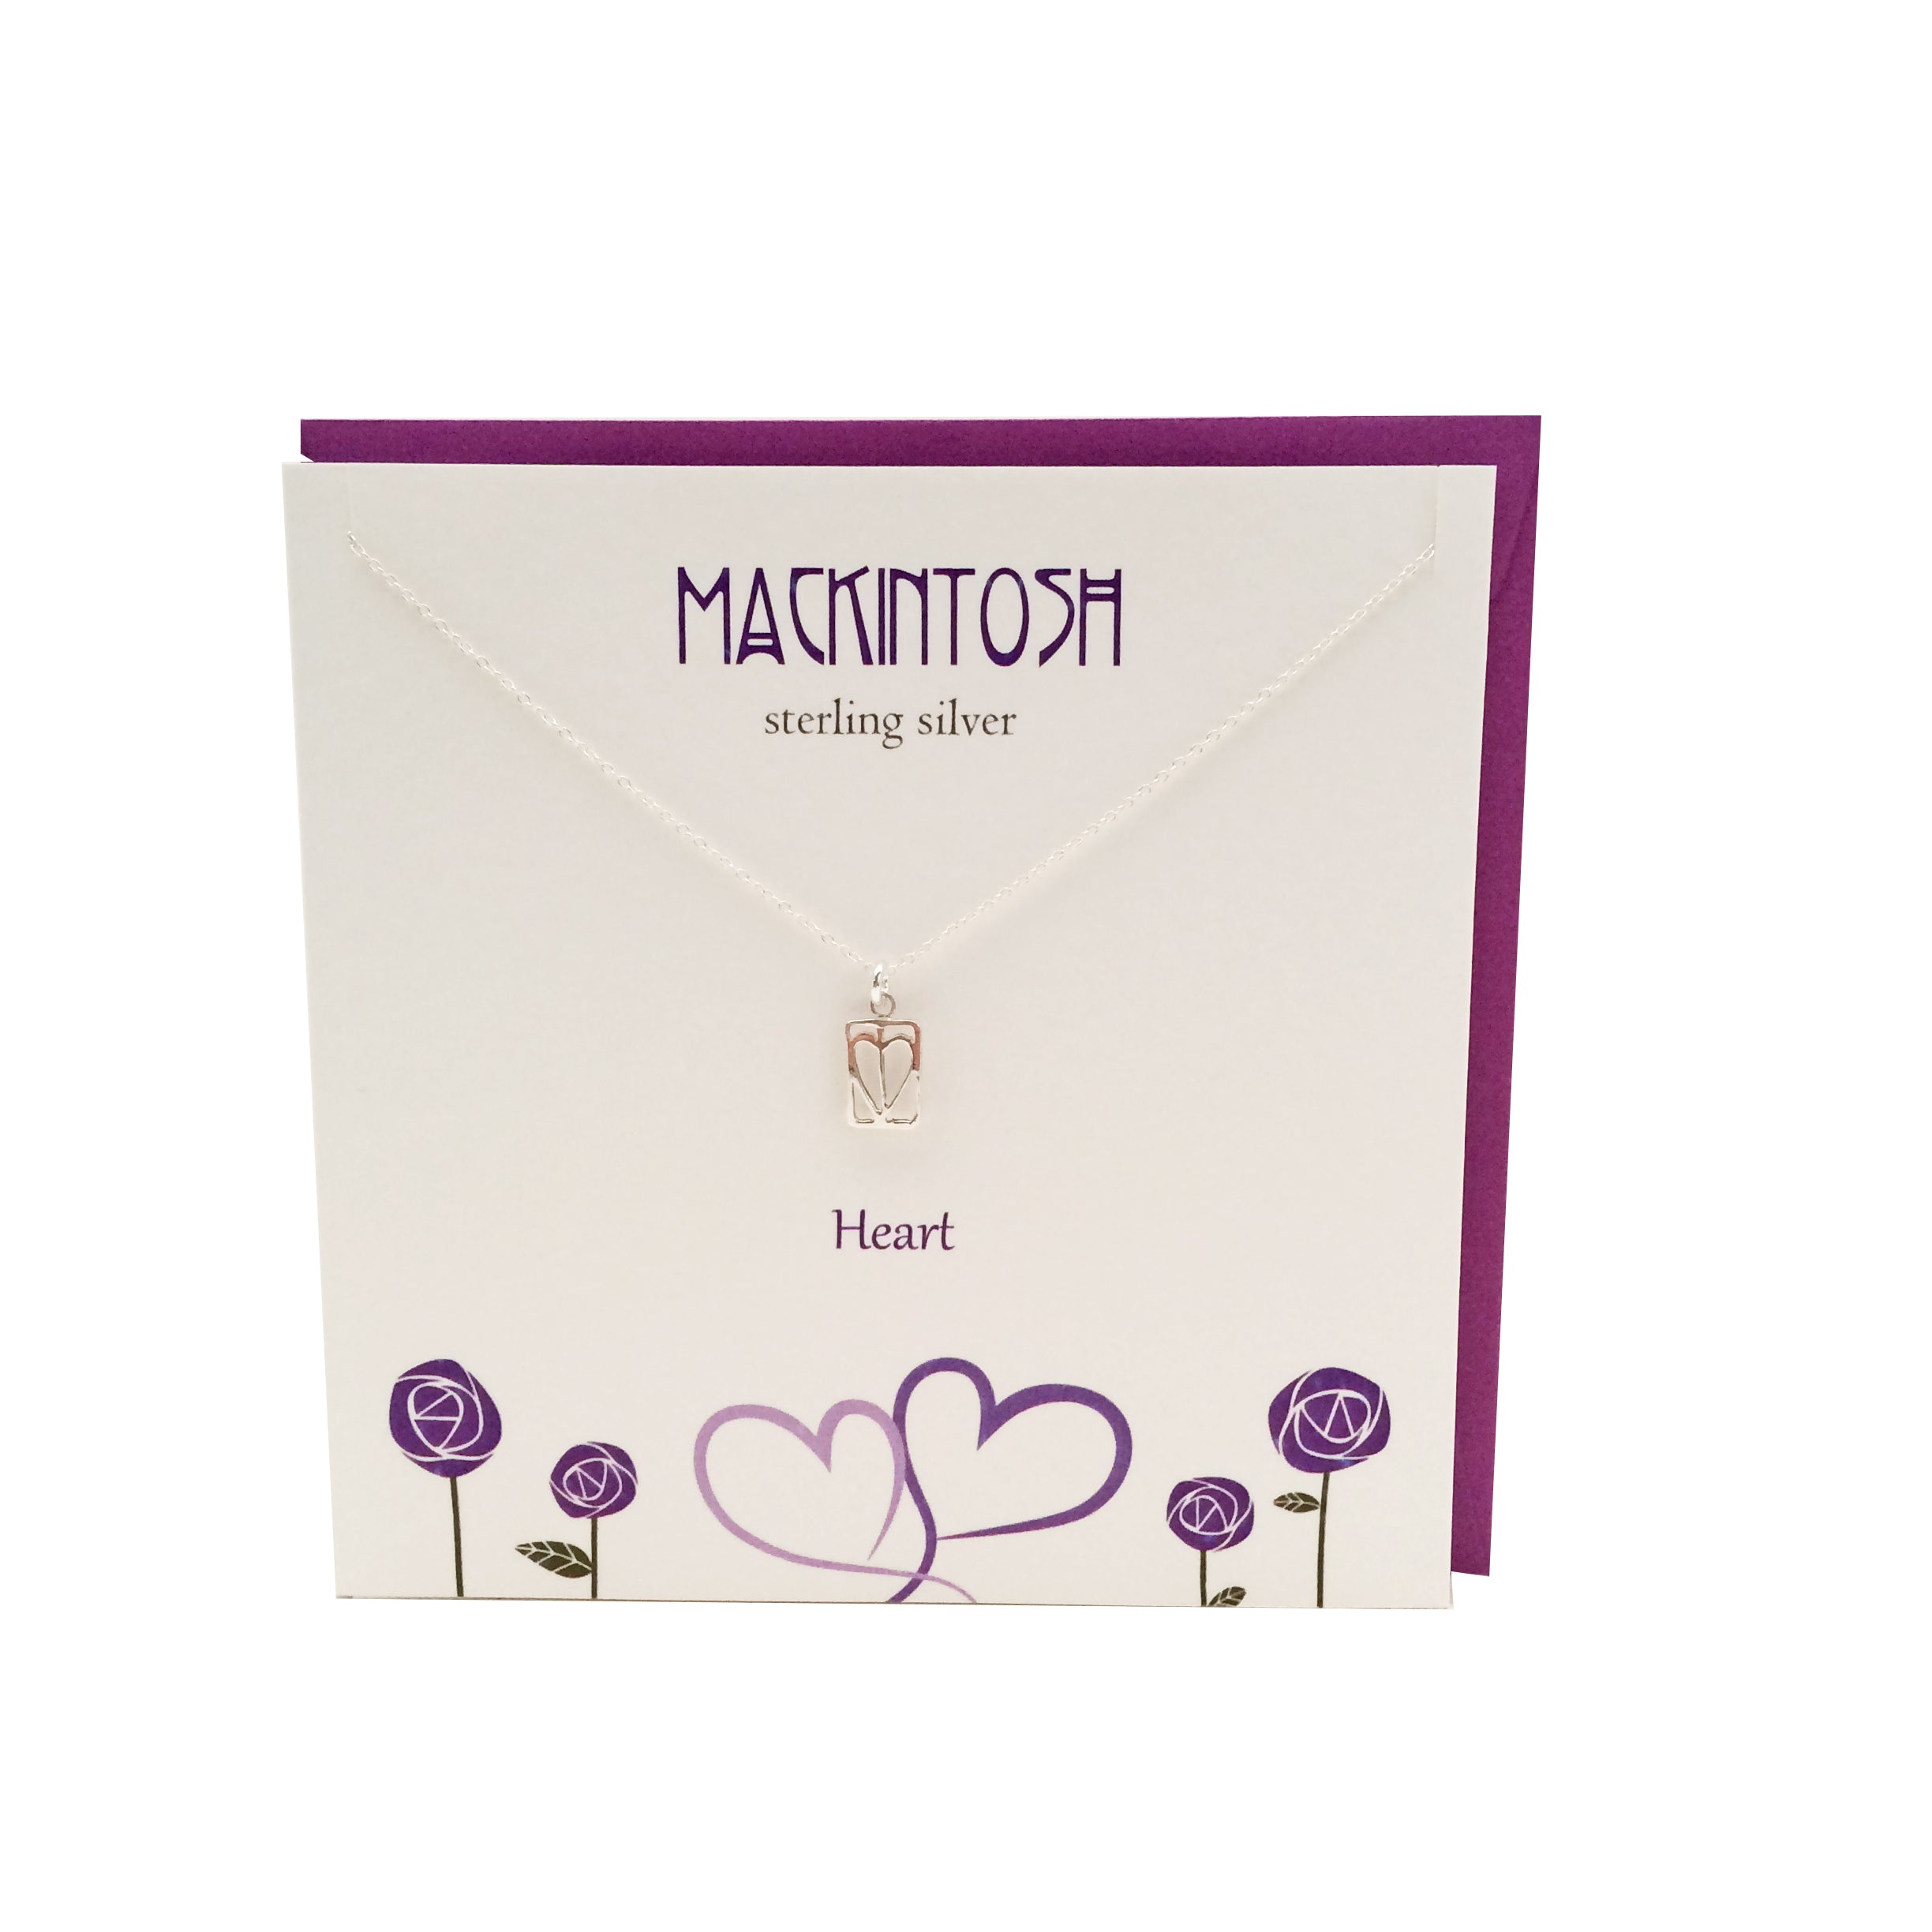 Mackintosh Inspired Heart silver necklace | The Silver Studio Scotland